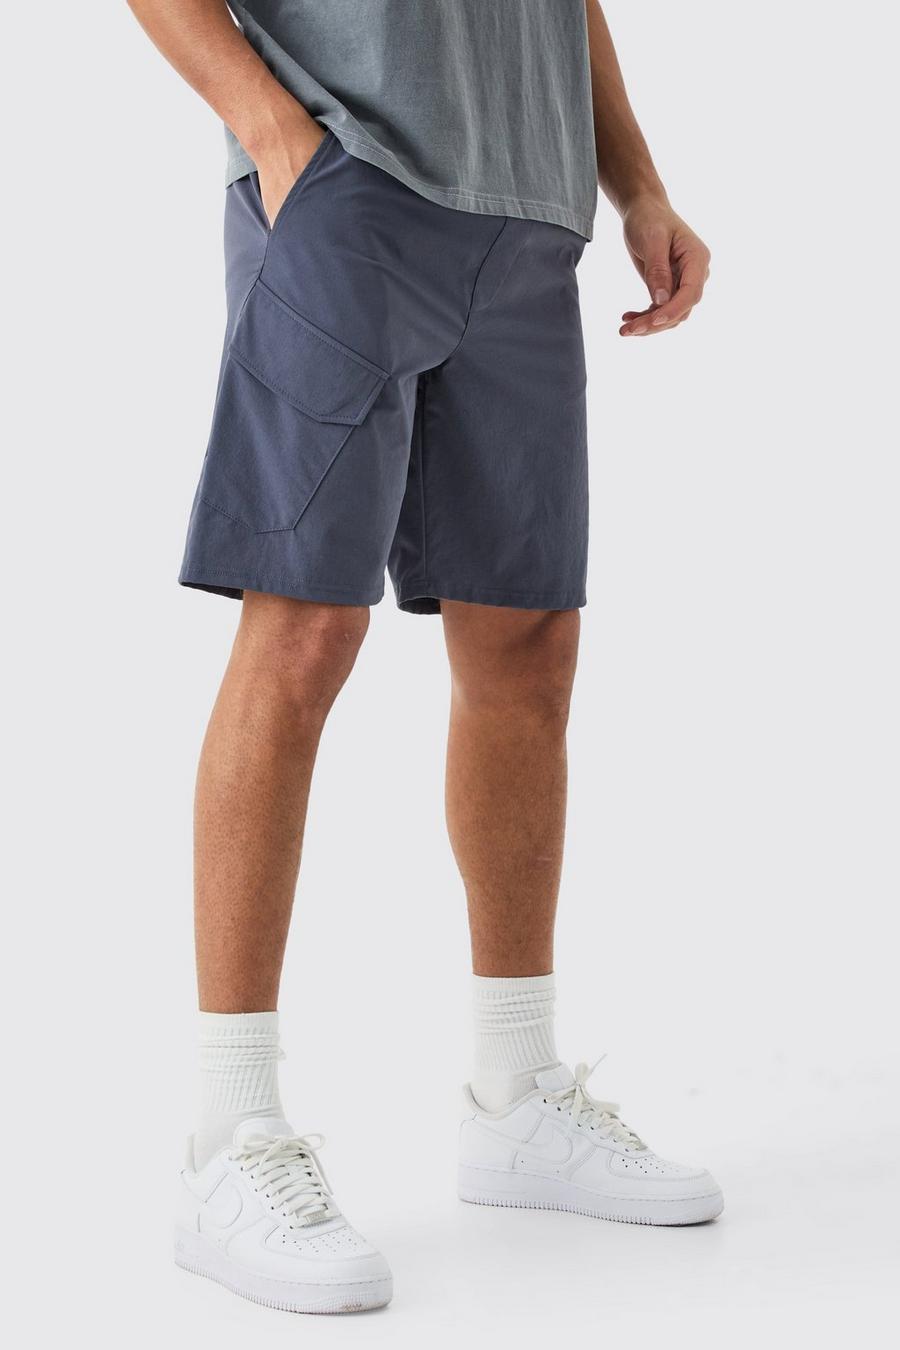 Slate blue Elastische Comfortabele Dunne Stretch Shorts